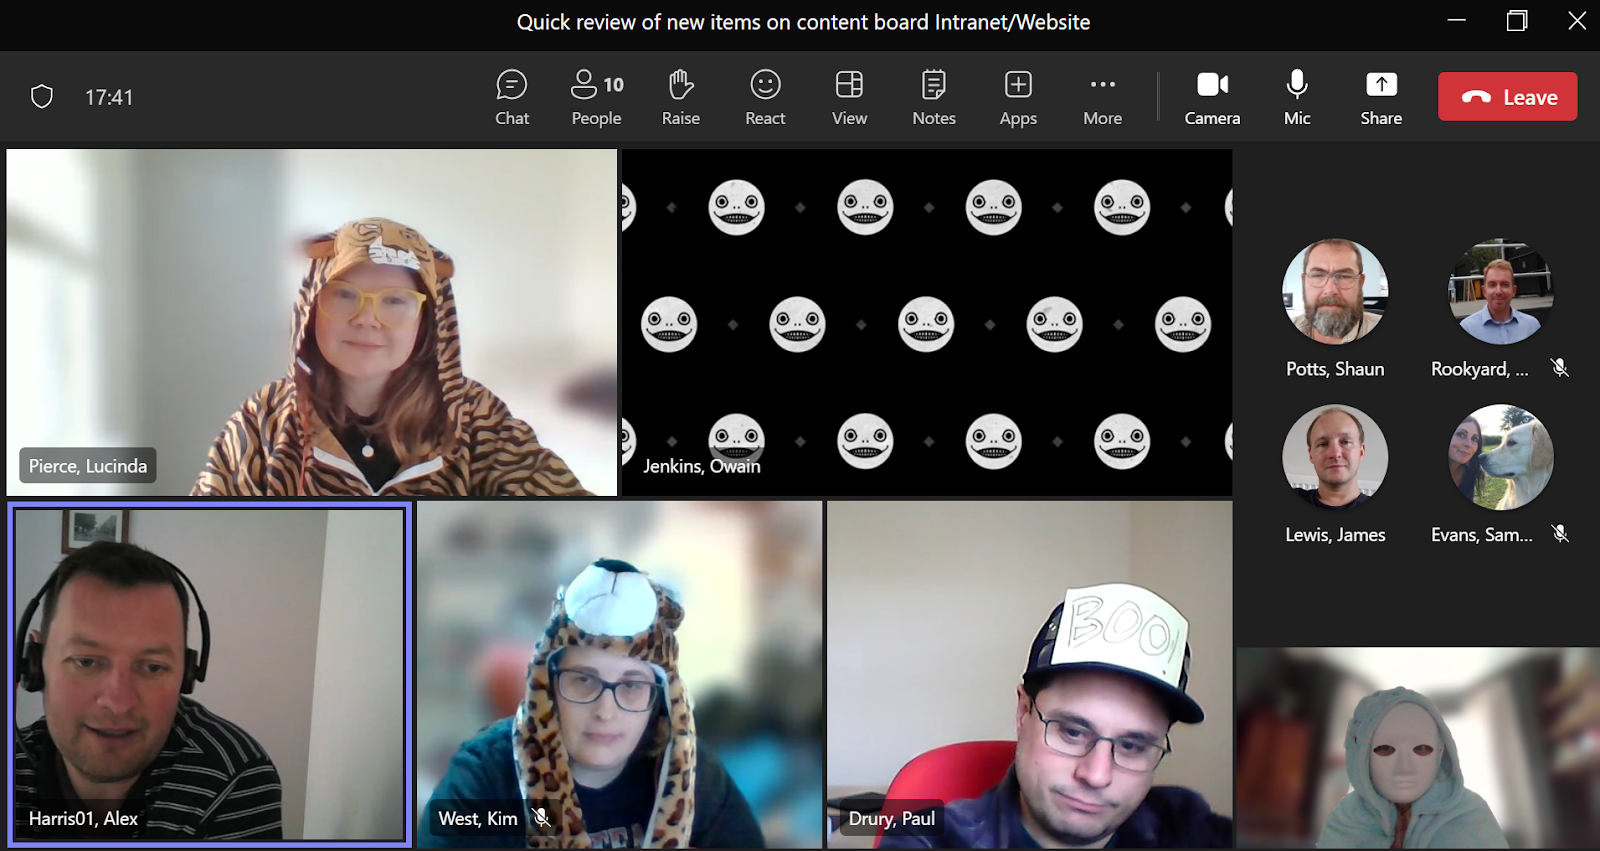 Digital team with halloween hats